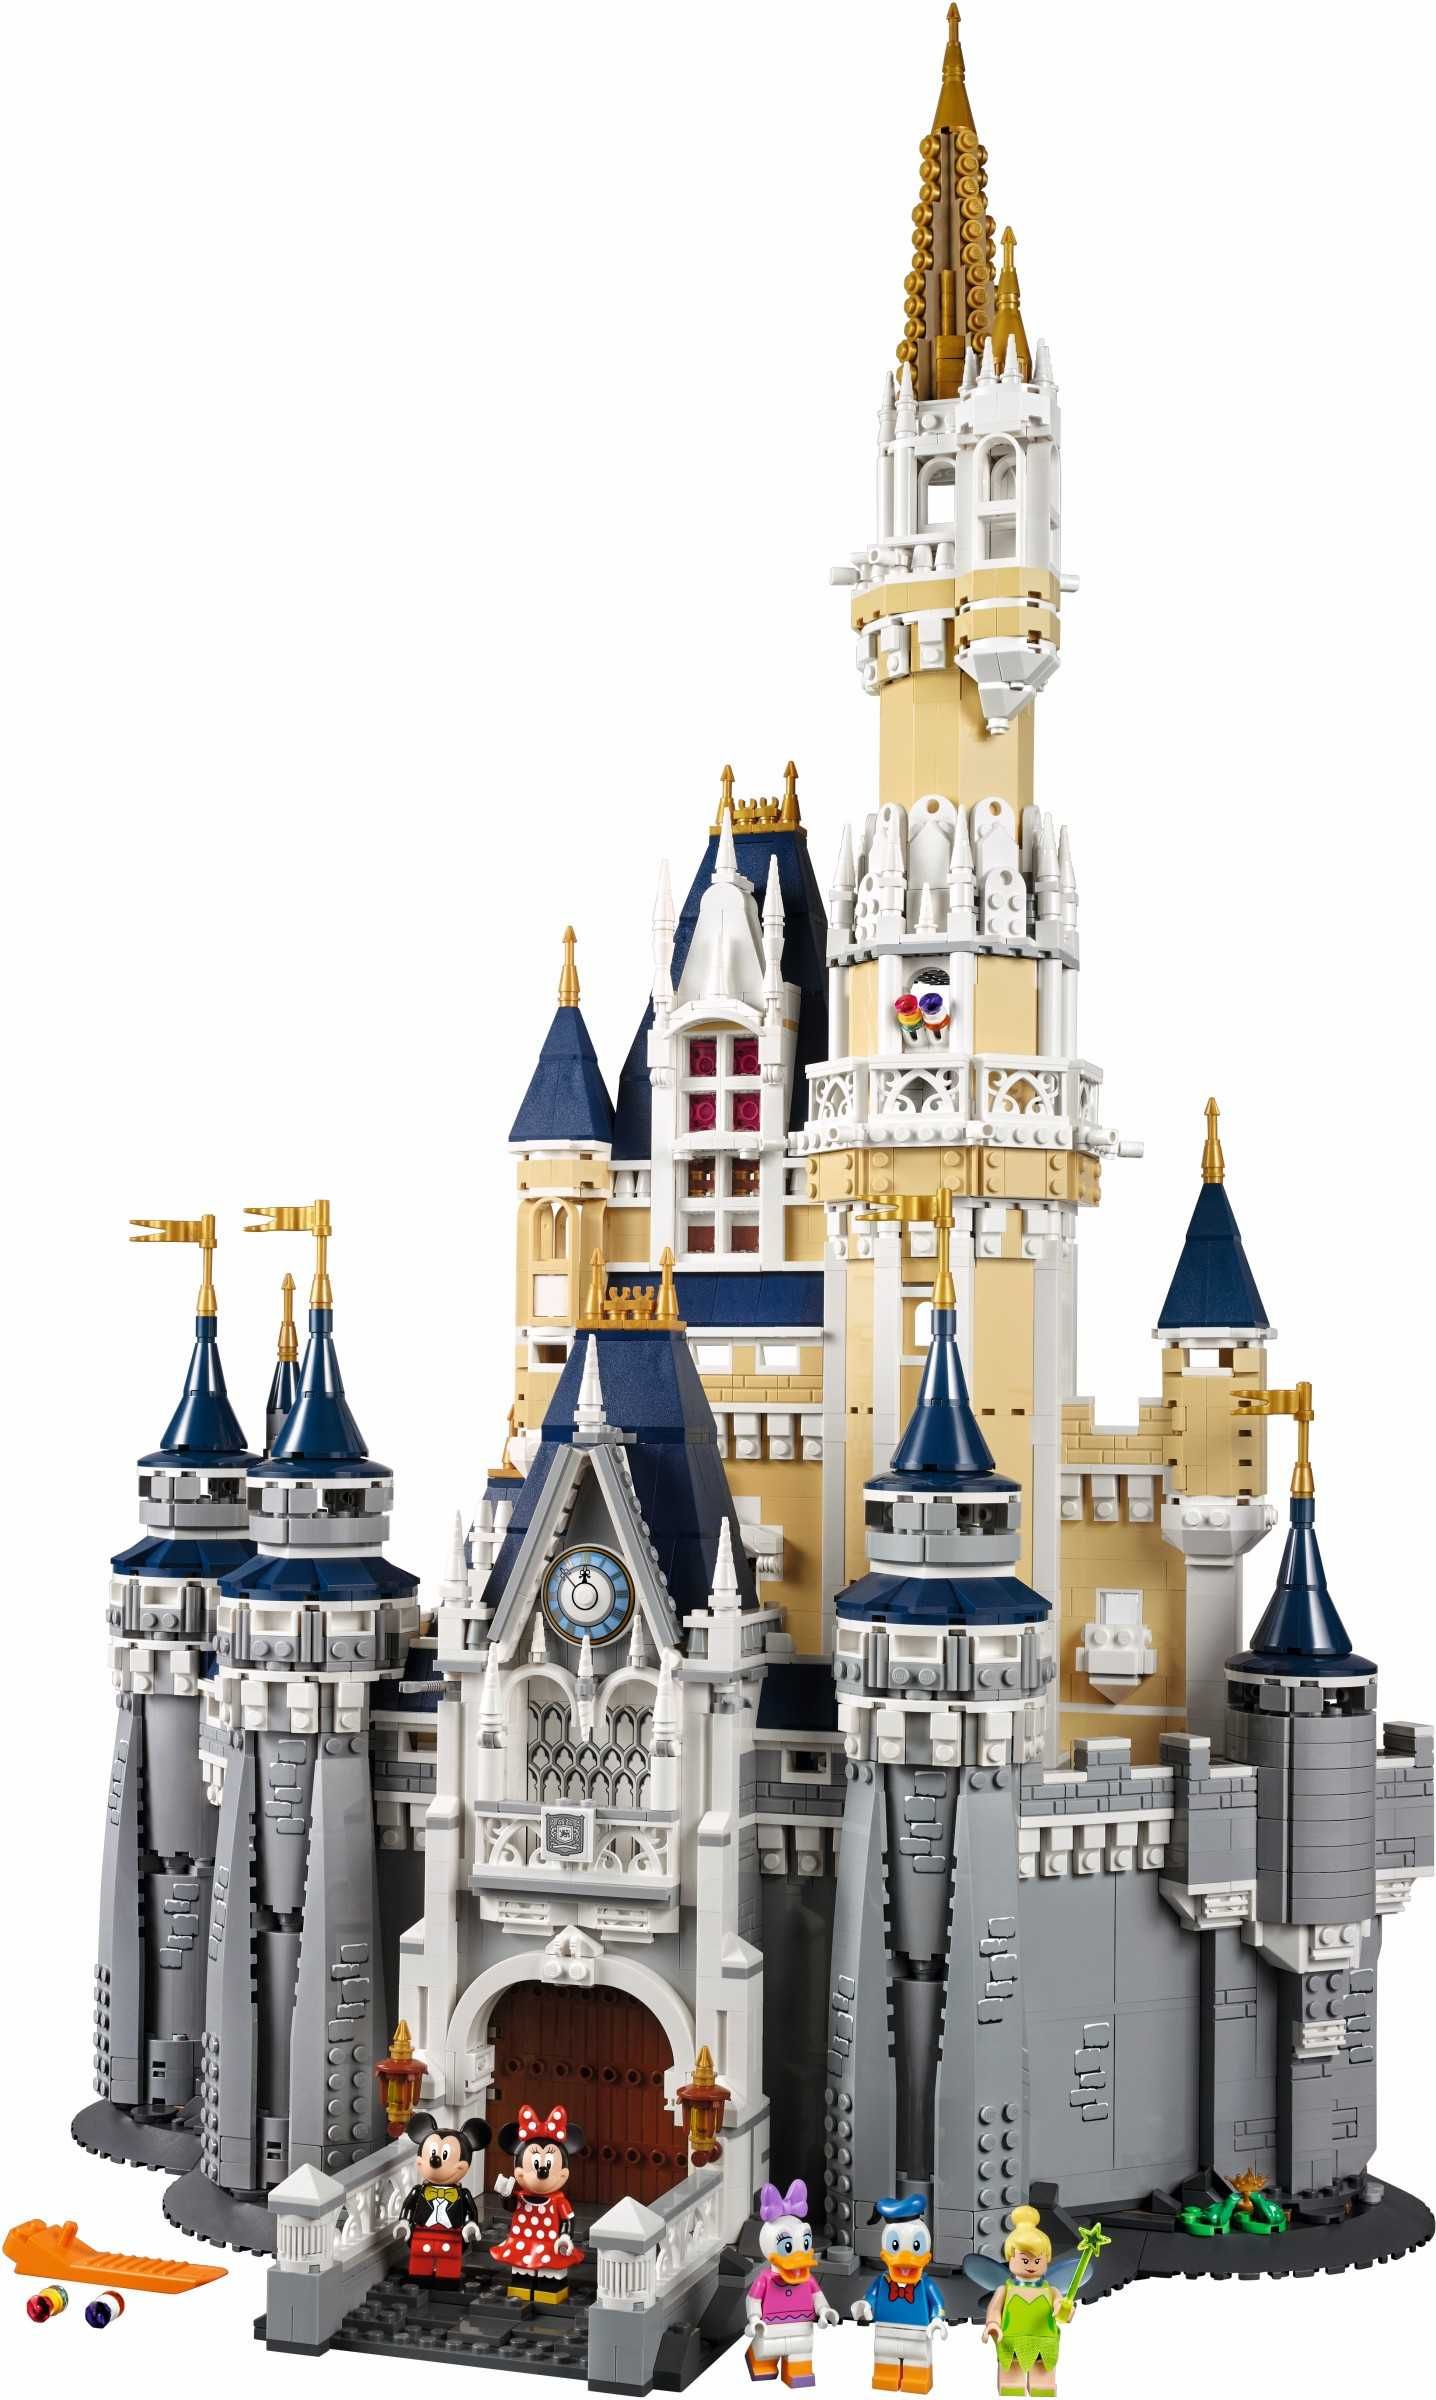 LEGO 71040 - Disney Castel - NOU, sigilat, original, ambalaj impecabil